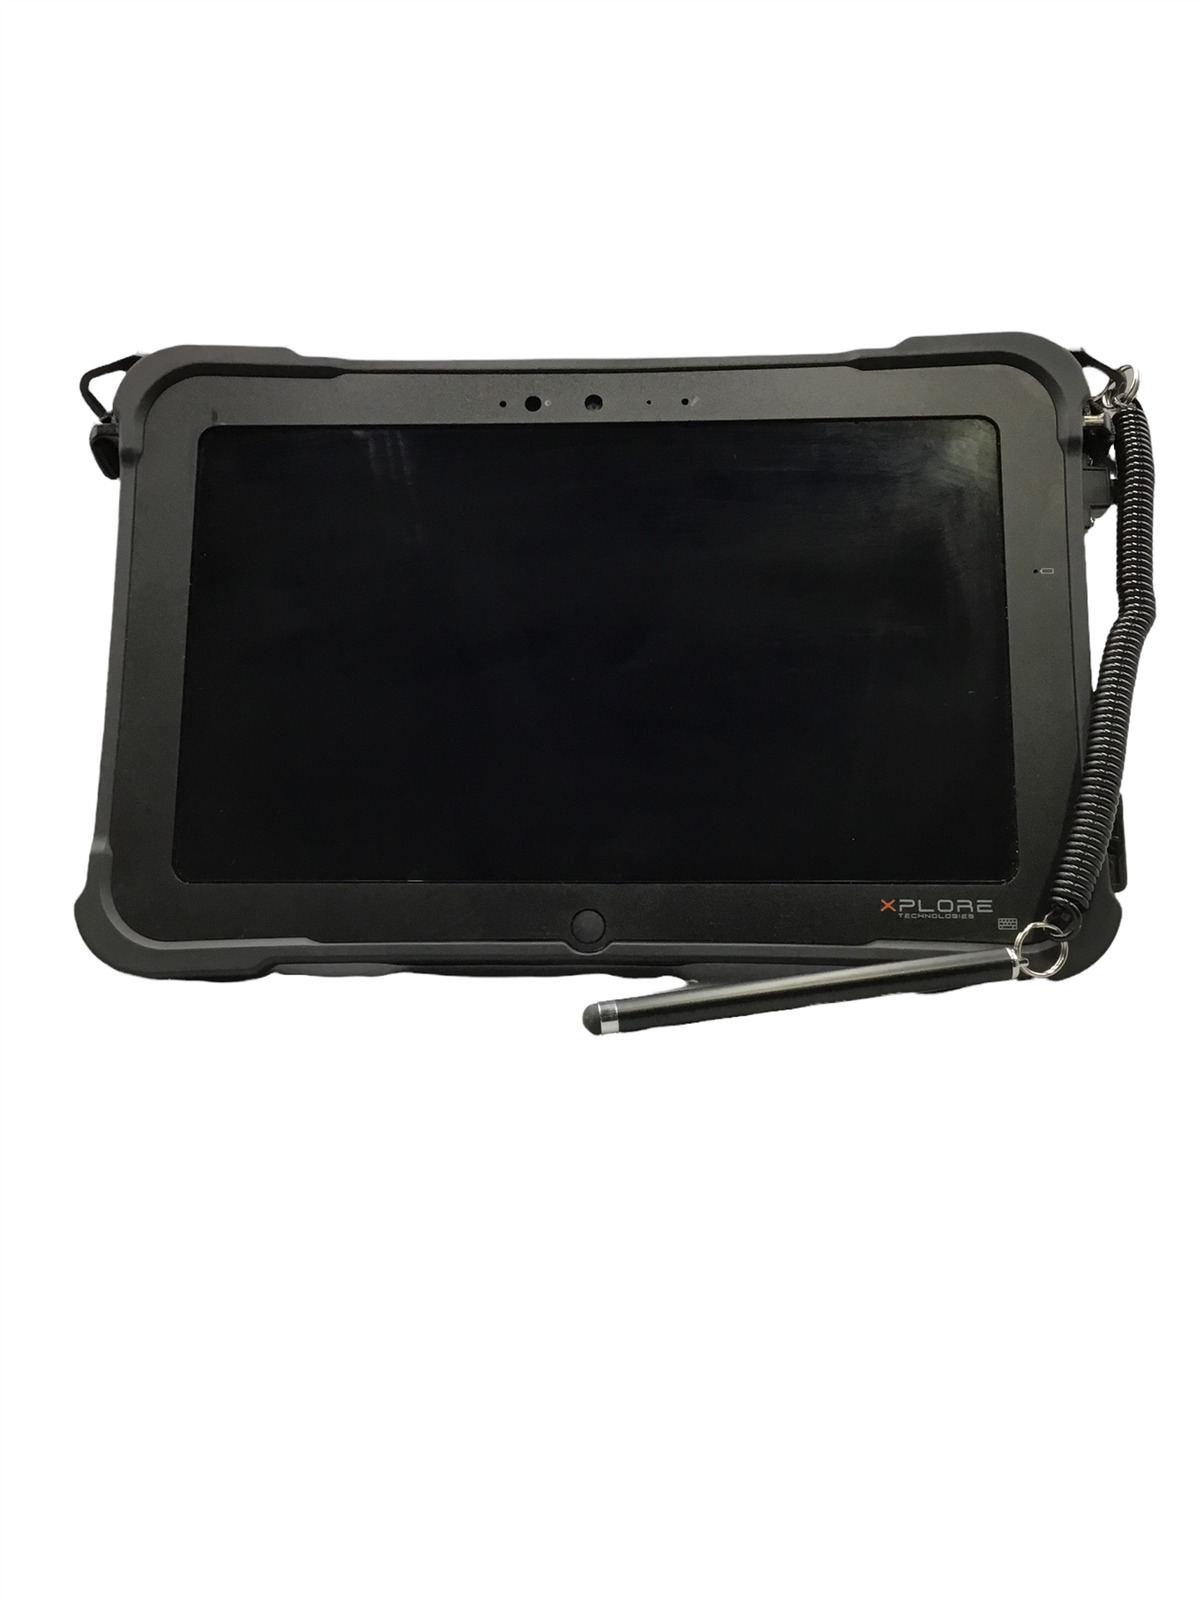 Xplore iX101B1 Tablet Atom E3845 1.91GHz 4GB 128GB SSD NO AC NO OS Bad Battery 